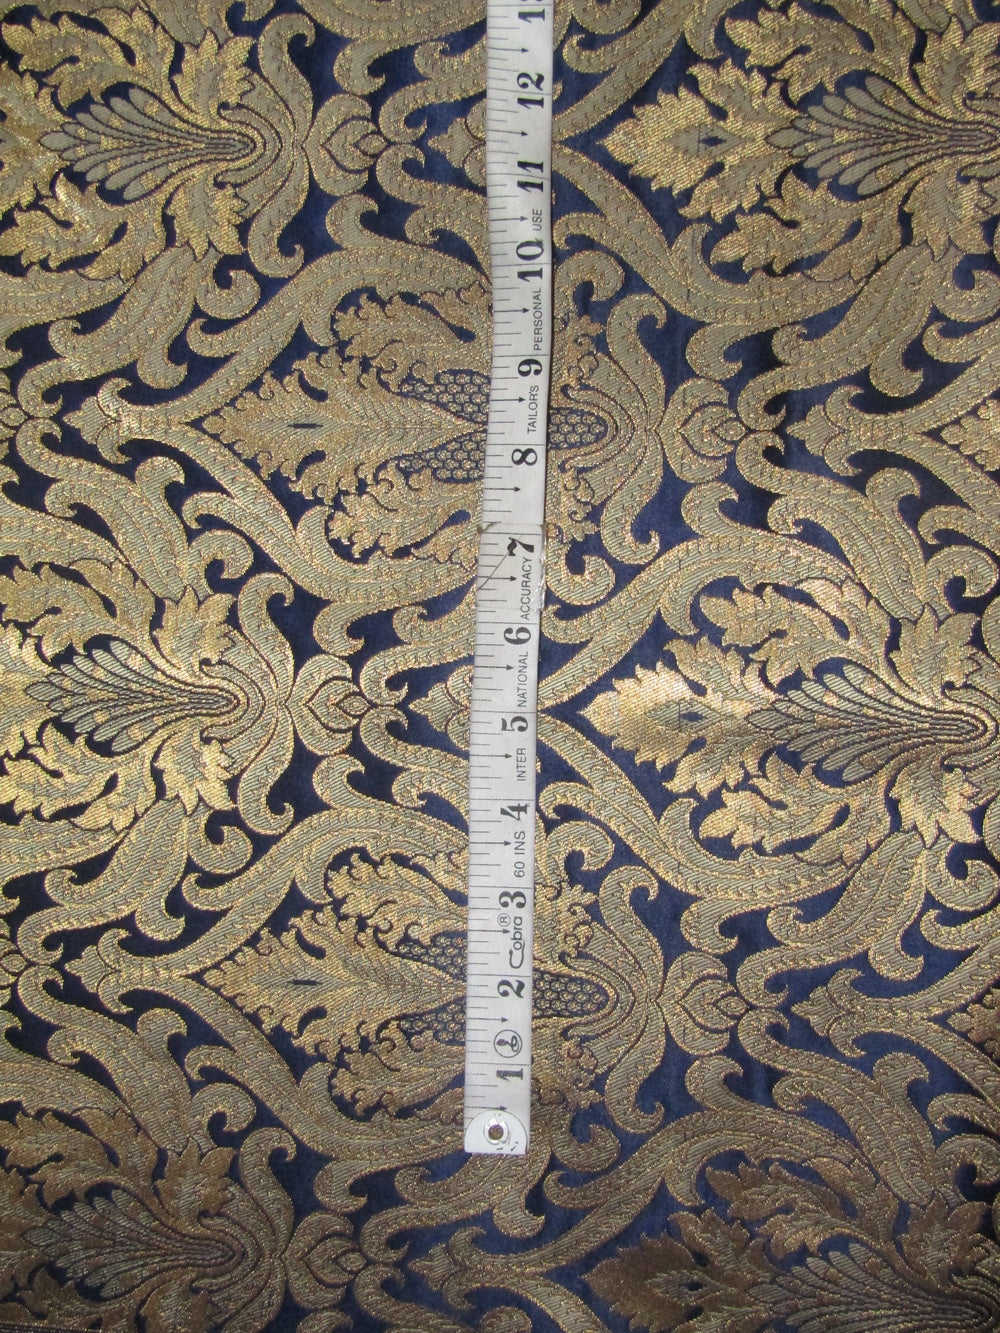 King Khwab silk Brocade [ a kings dream] fabric Navy Blue x metallic gold Color 44" WIDE